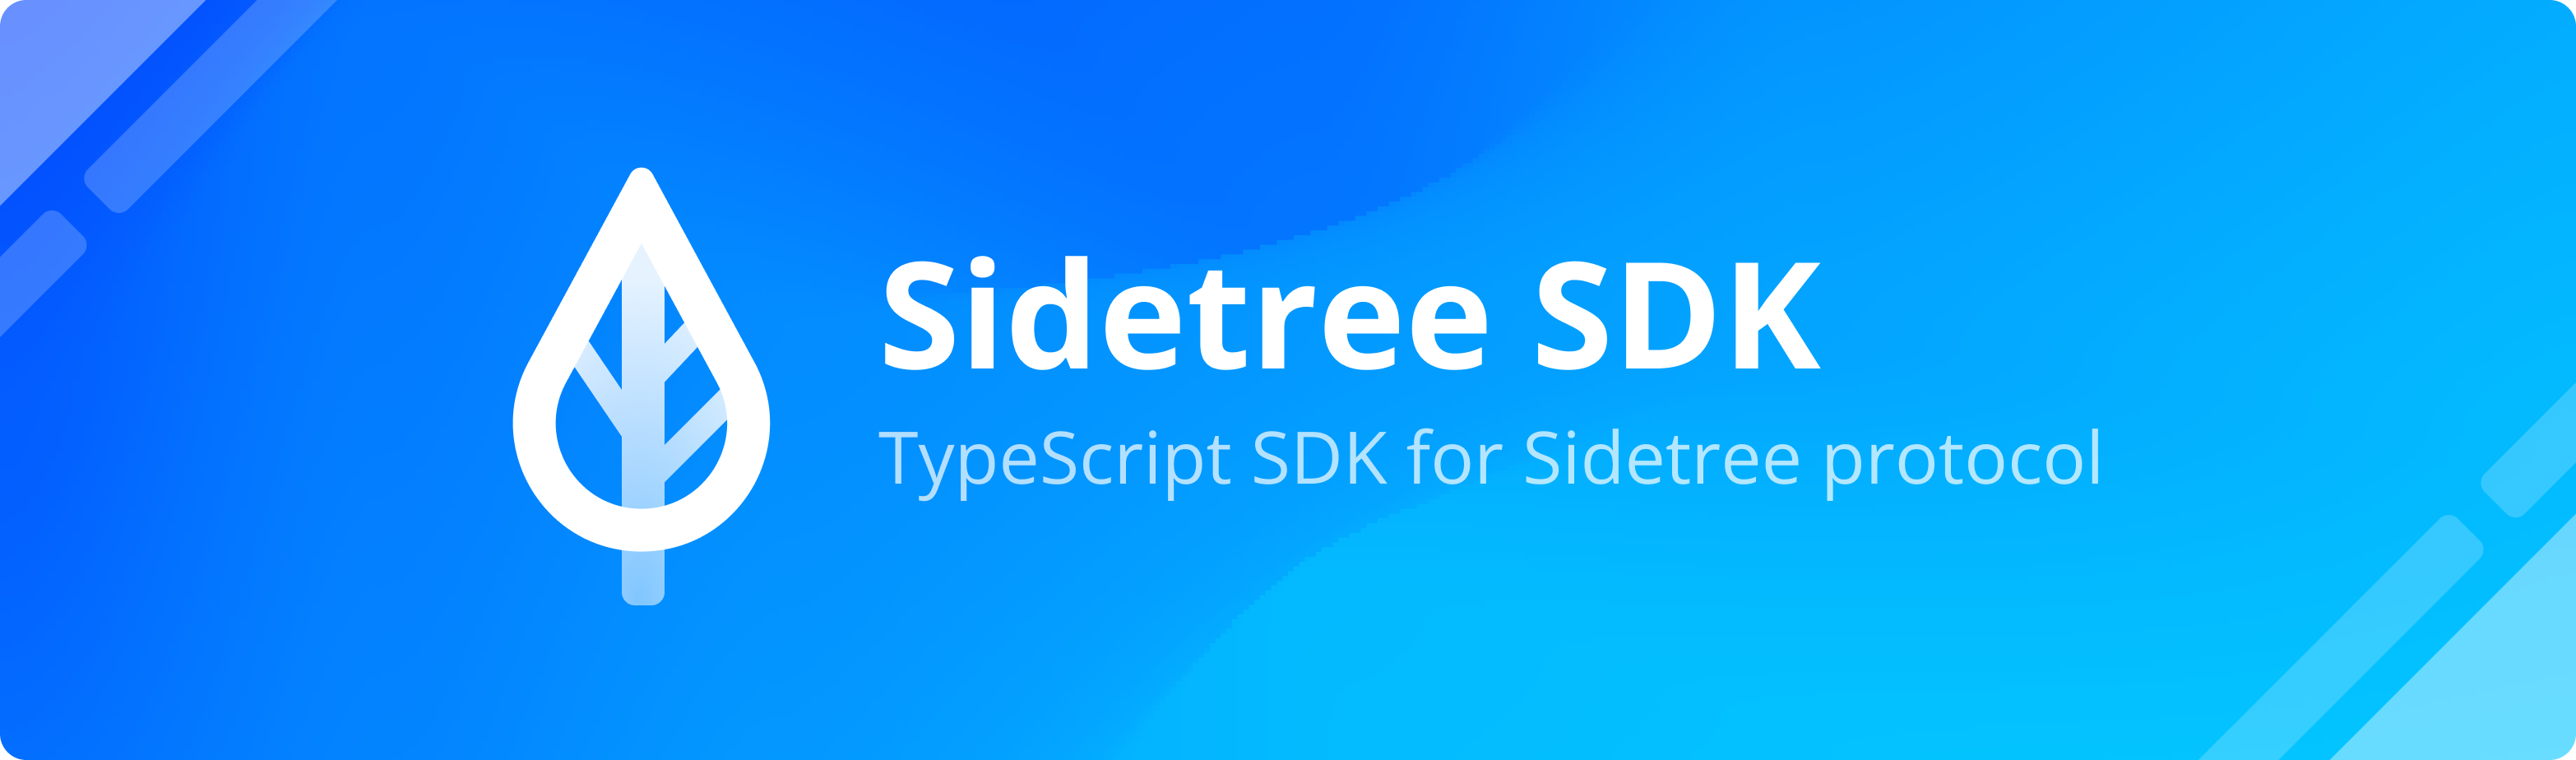 Sidetree SDK